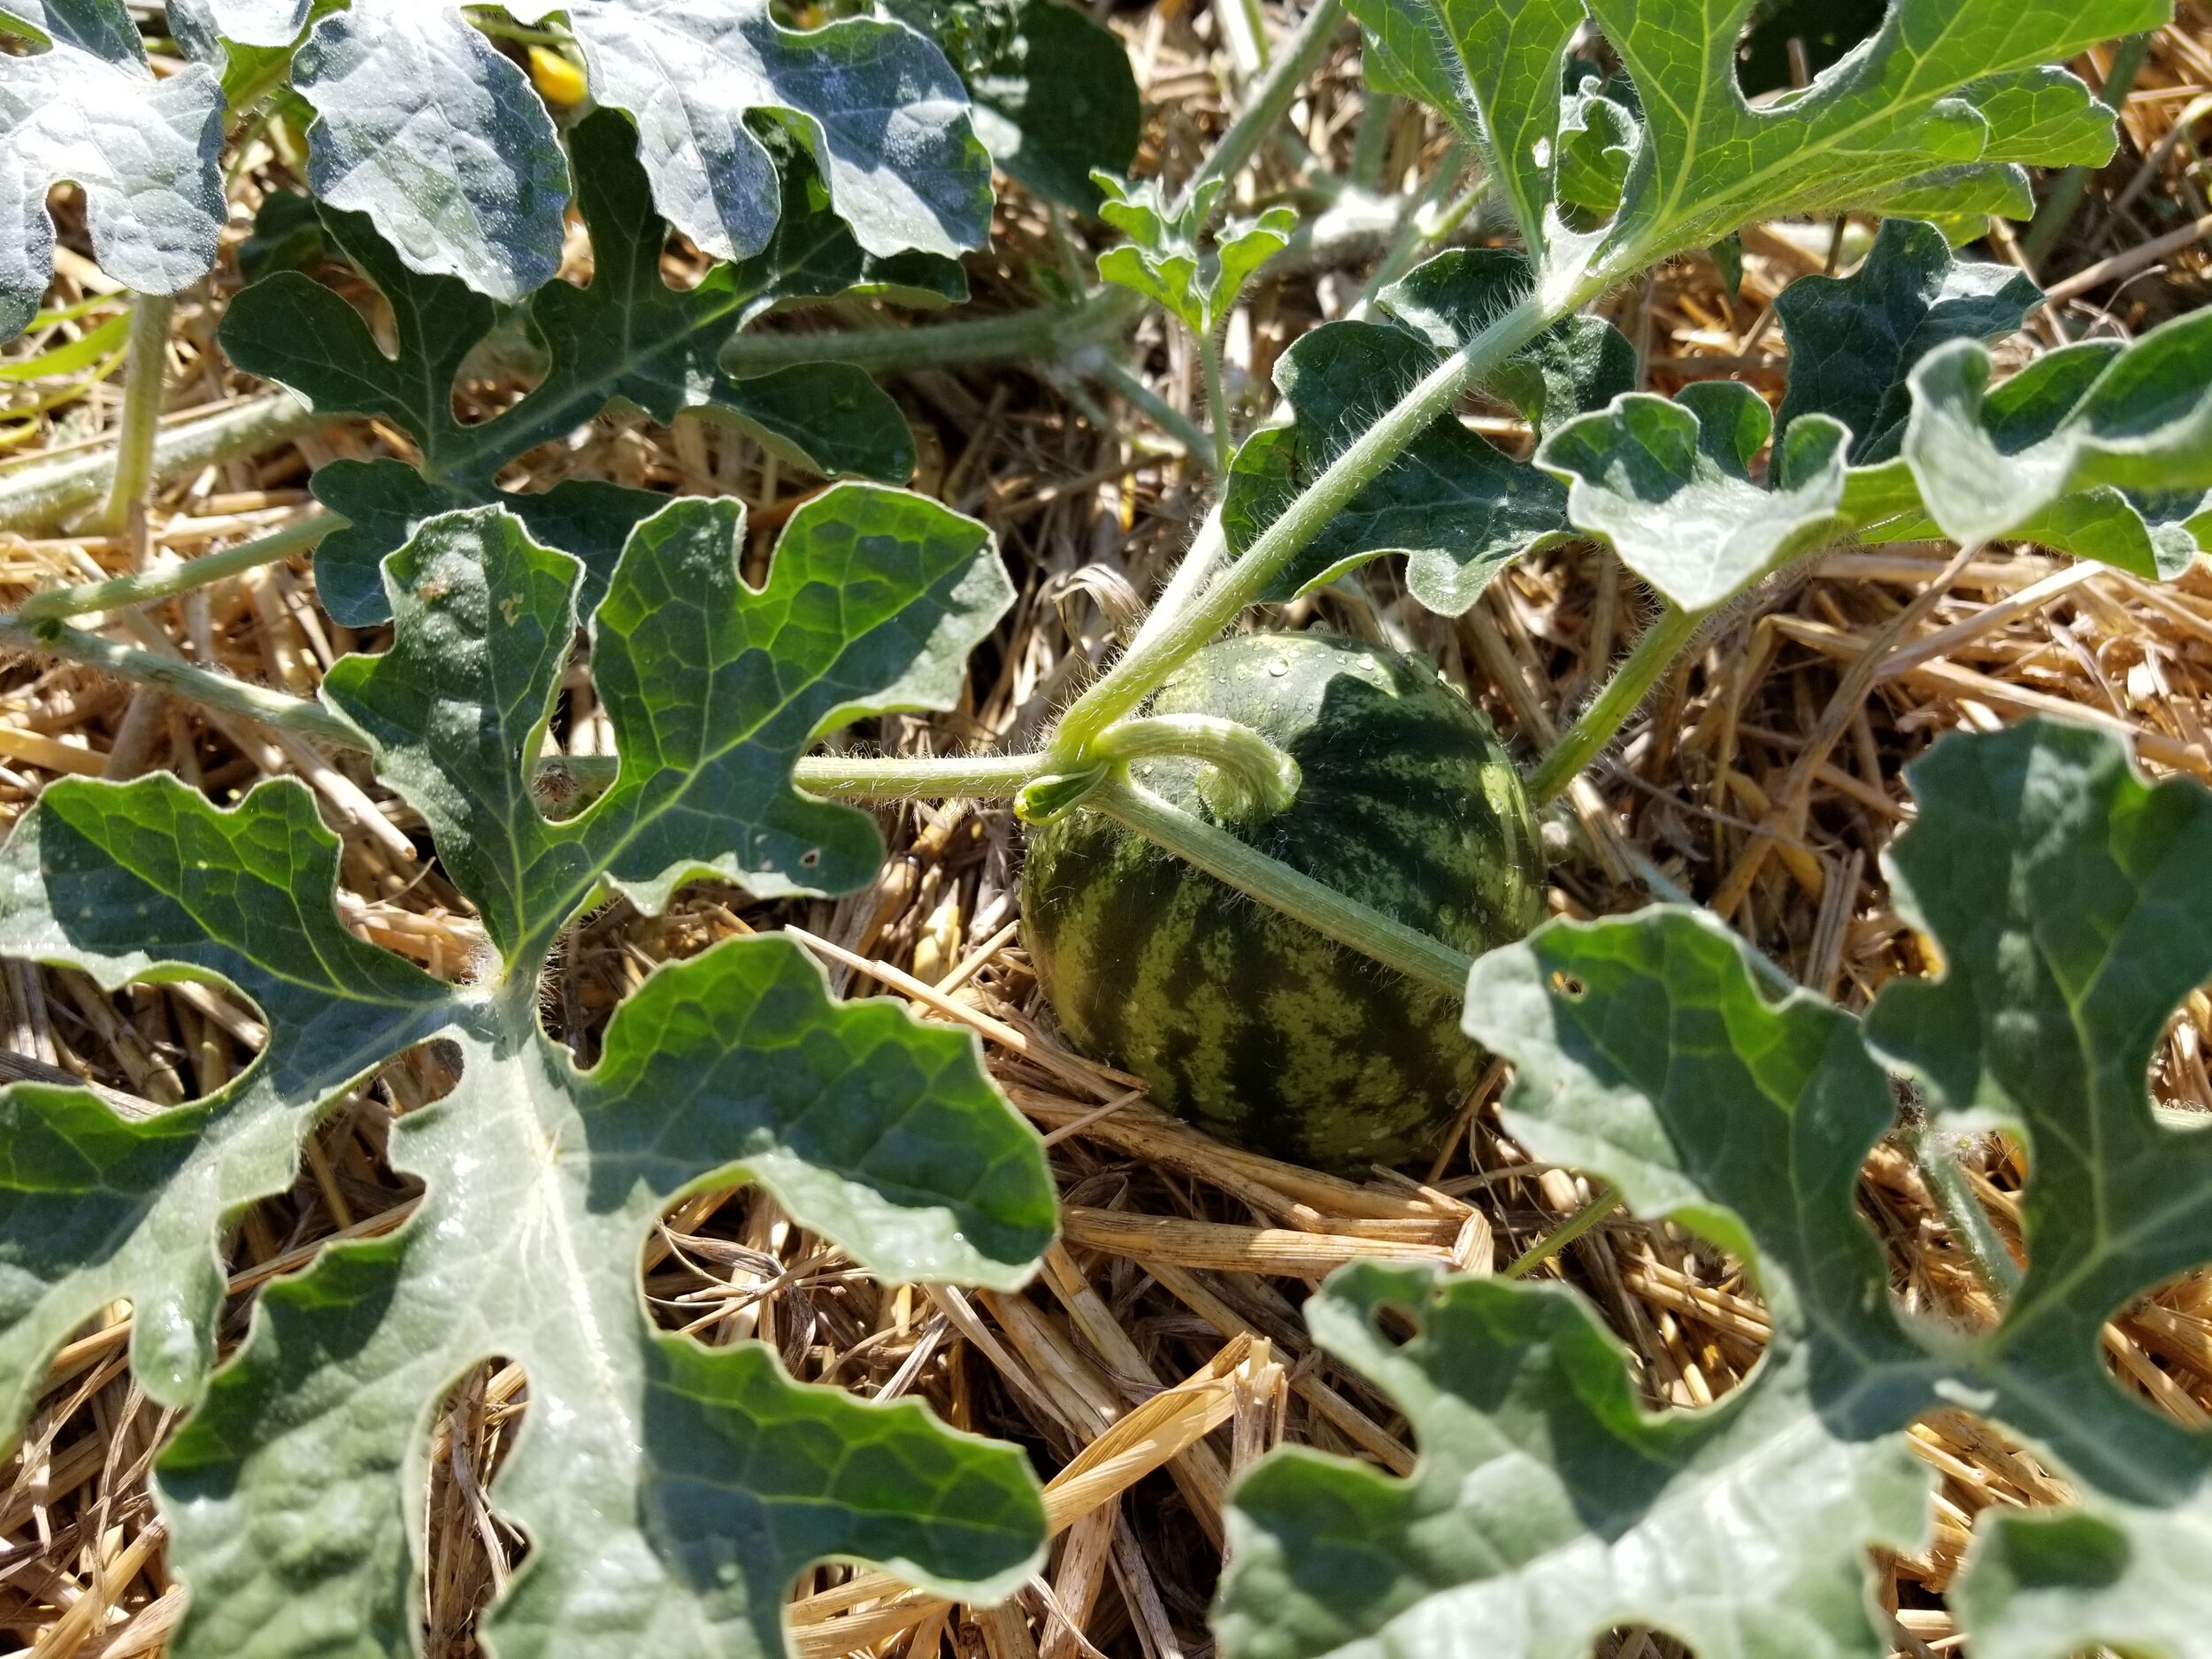 07.10.20 Blacktail Mountain watermelon